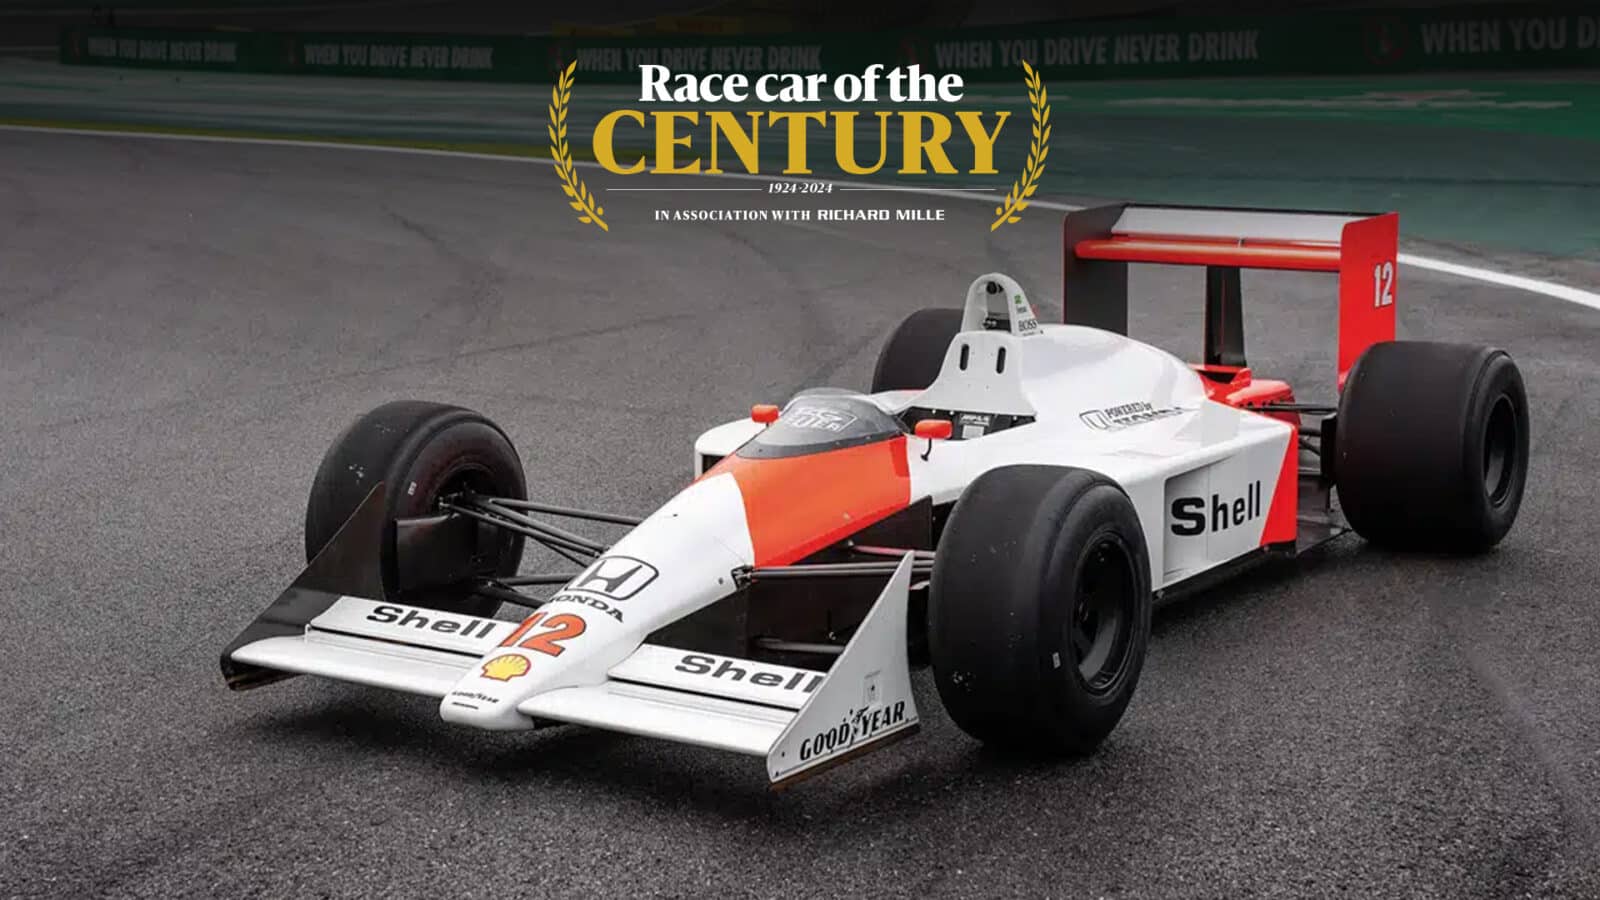 McLaren MP4:4 Race car of the century